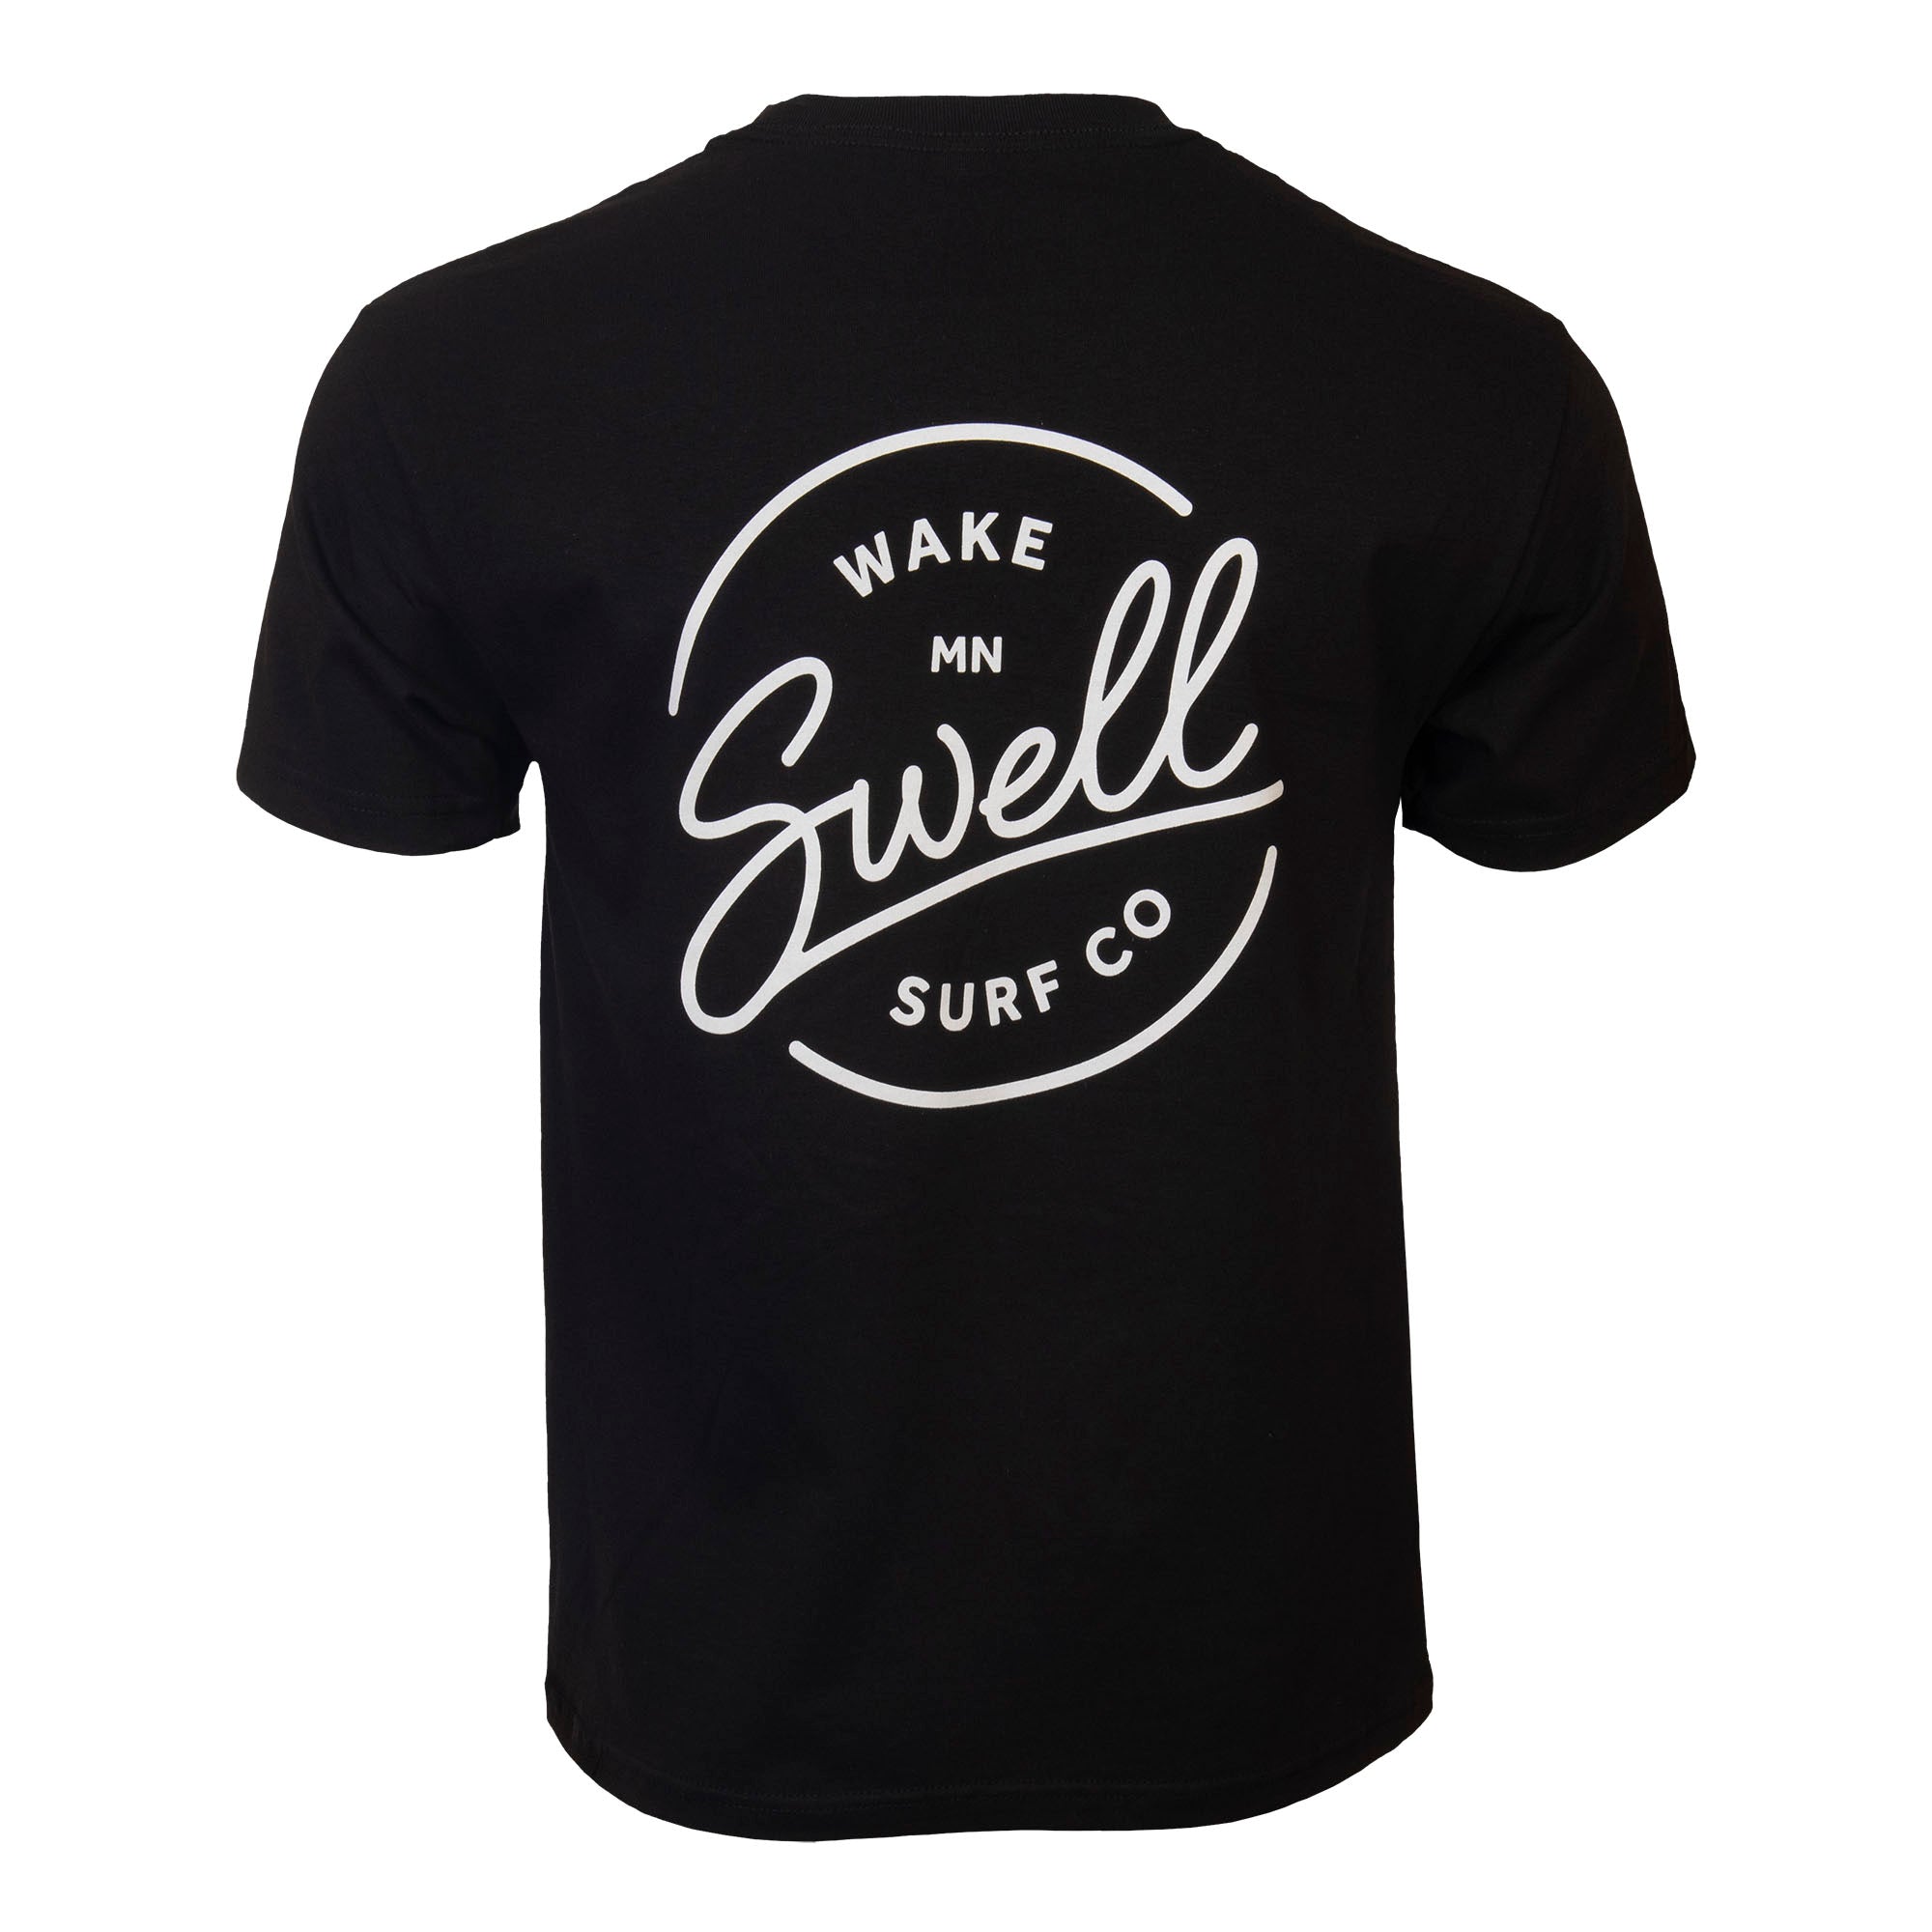 SWELL Wakesurf Co T-Shirt - Classic Fit Cotton Tee - SWELL Wakesurf